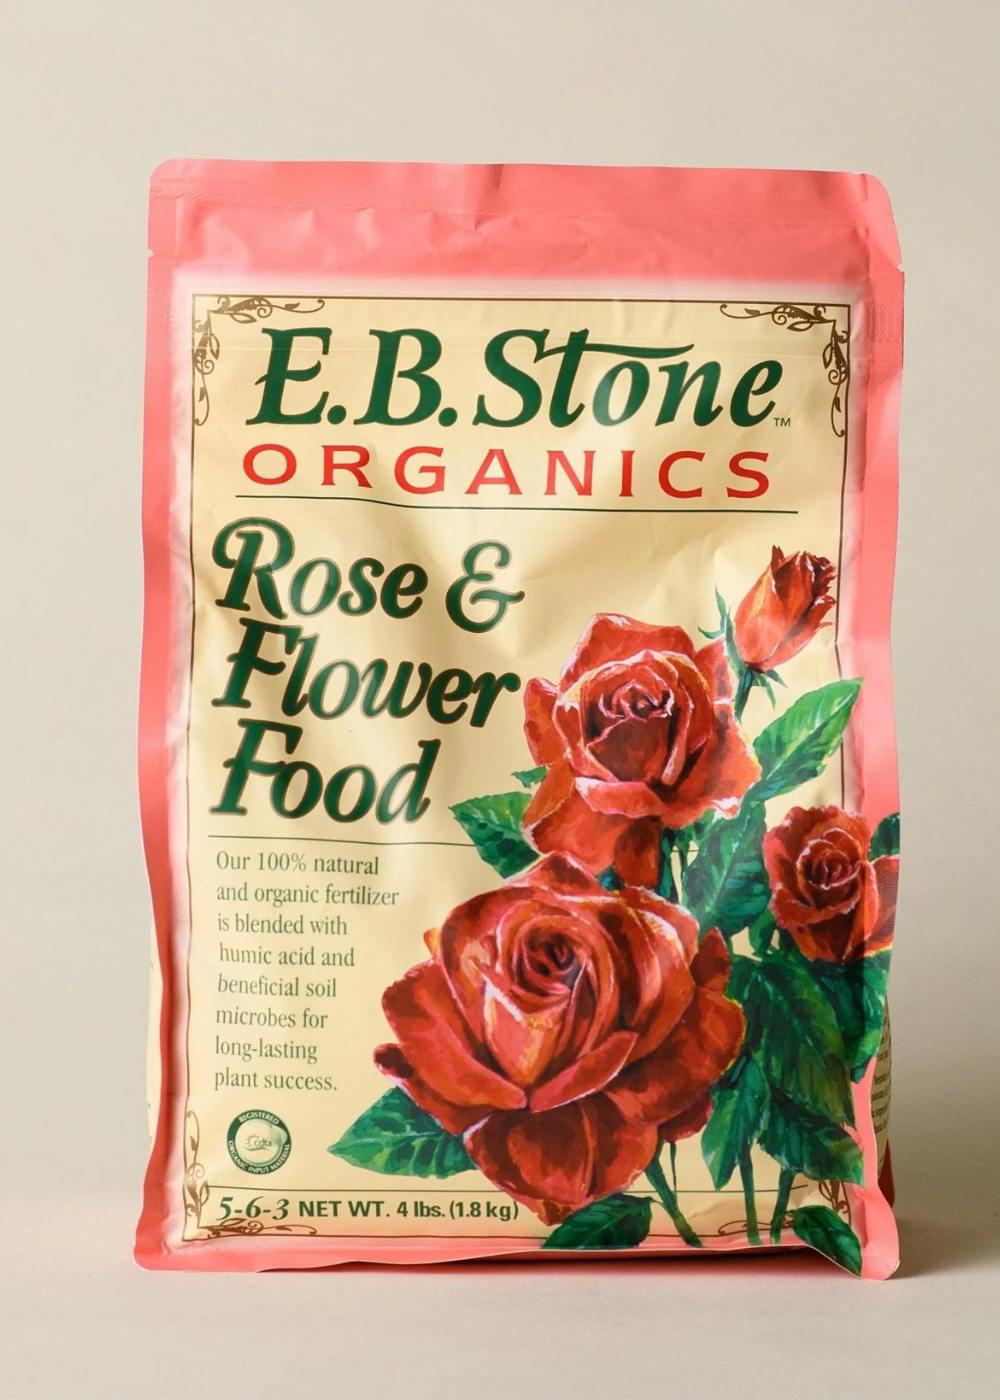 Organic Rose Petal Tea - Culinary Blossom